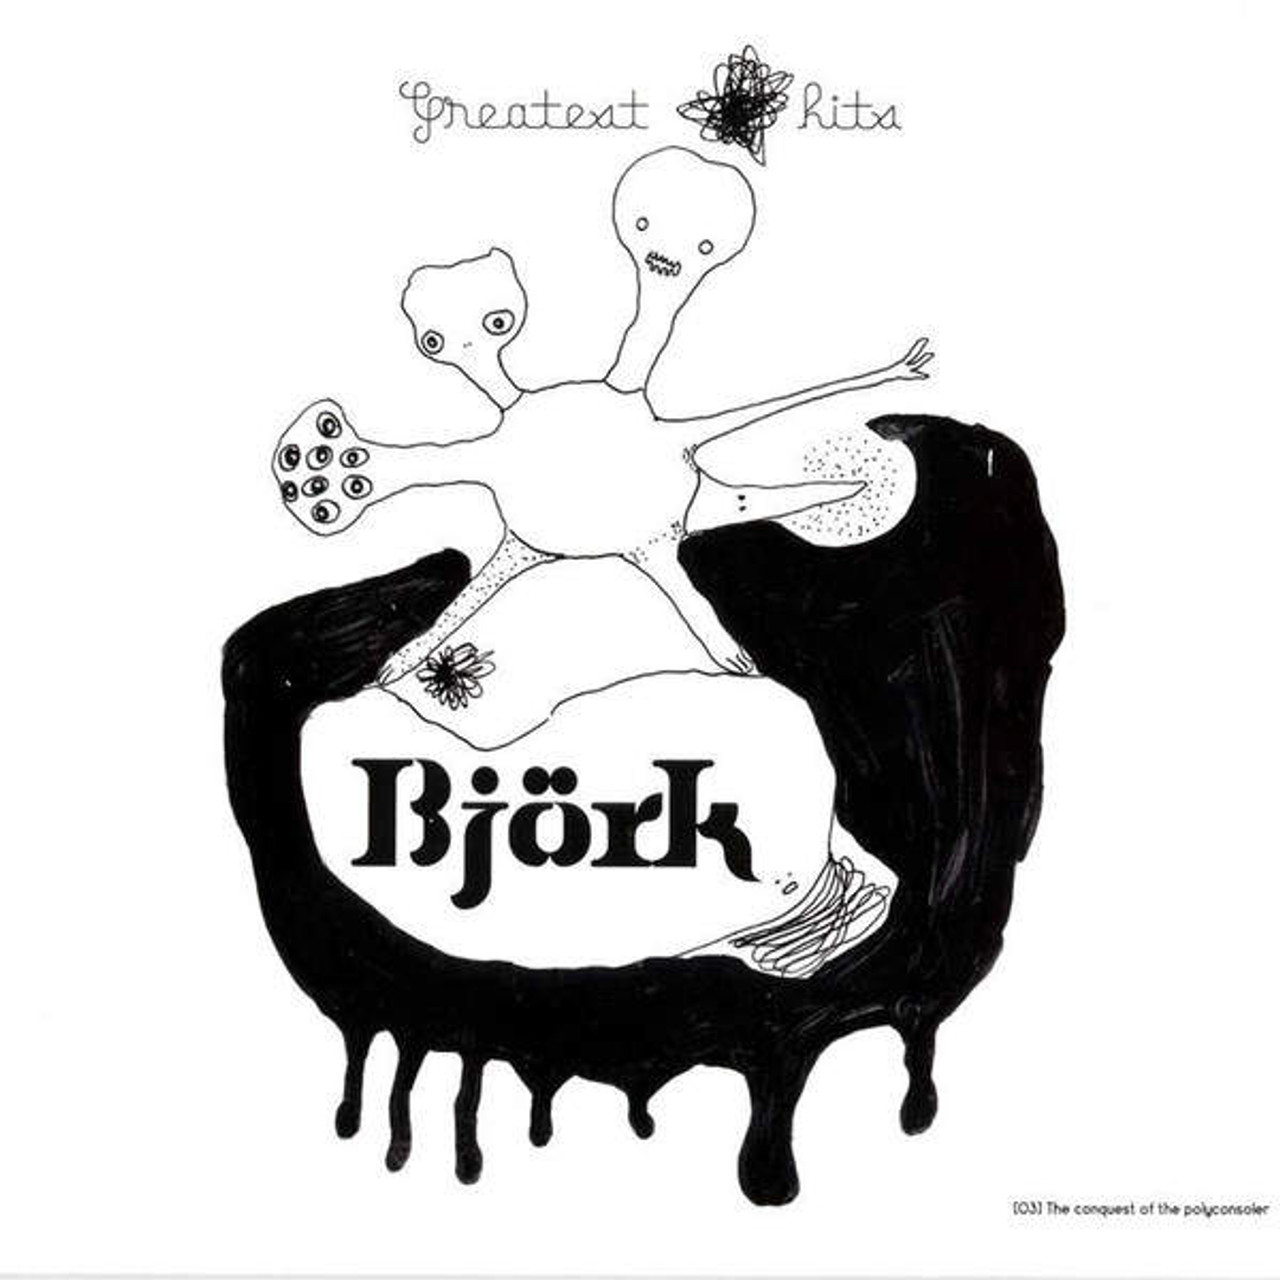 Bjork - Greatest Hits (2LP 180g vinyl)